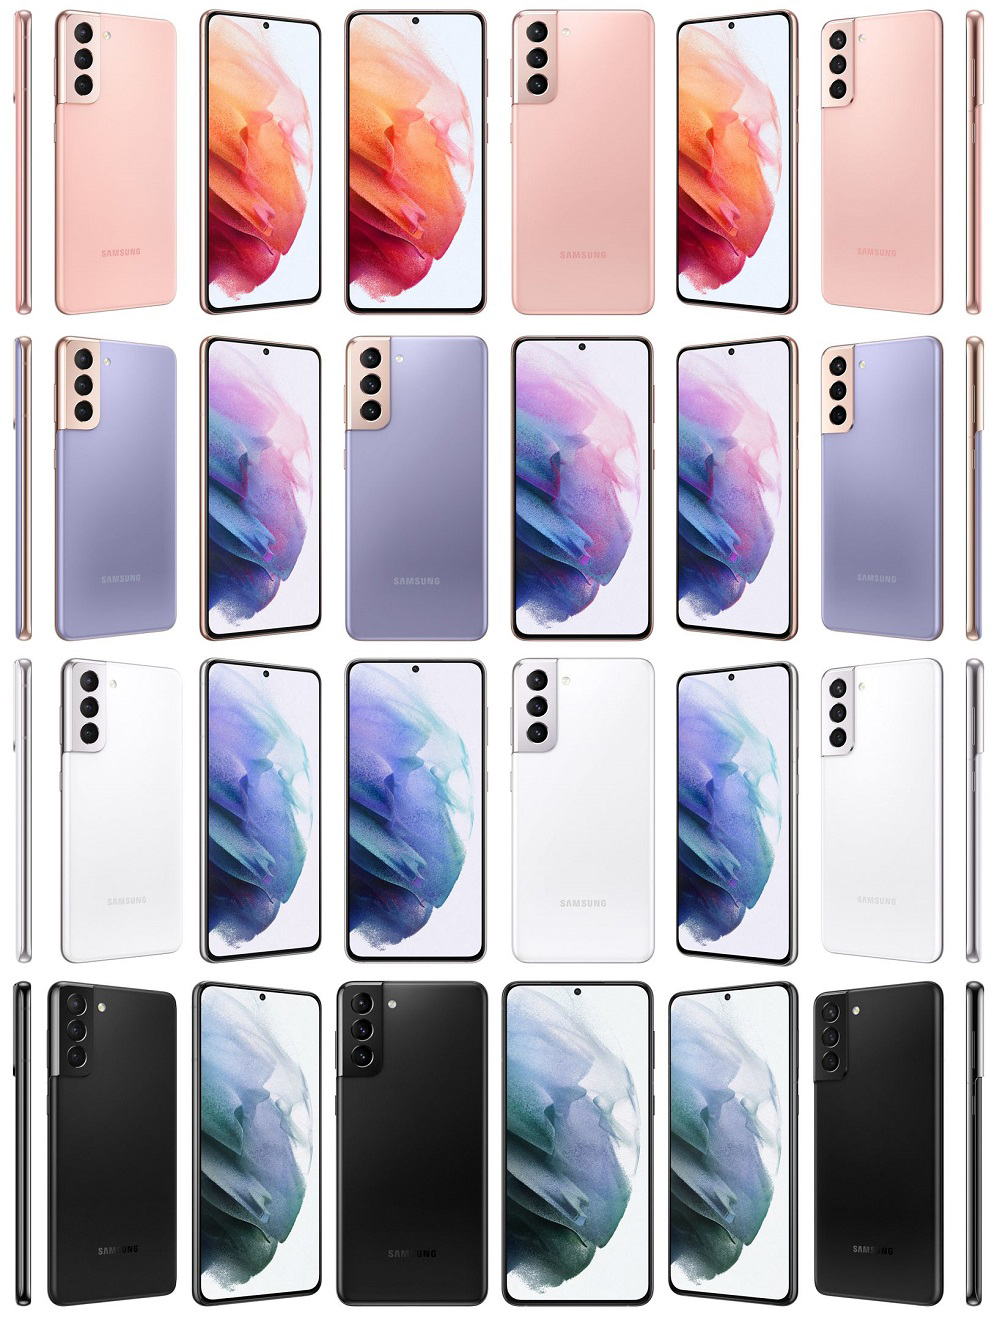 Samsung Galaxy S21, Samsung Galaxy S21: Όλα τα smartphone της σειράς σε όλα τα χρώματα [renders]